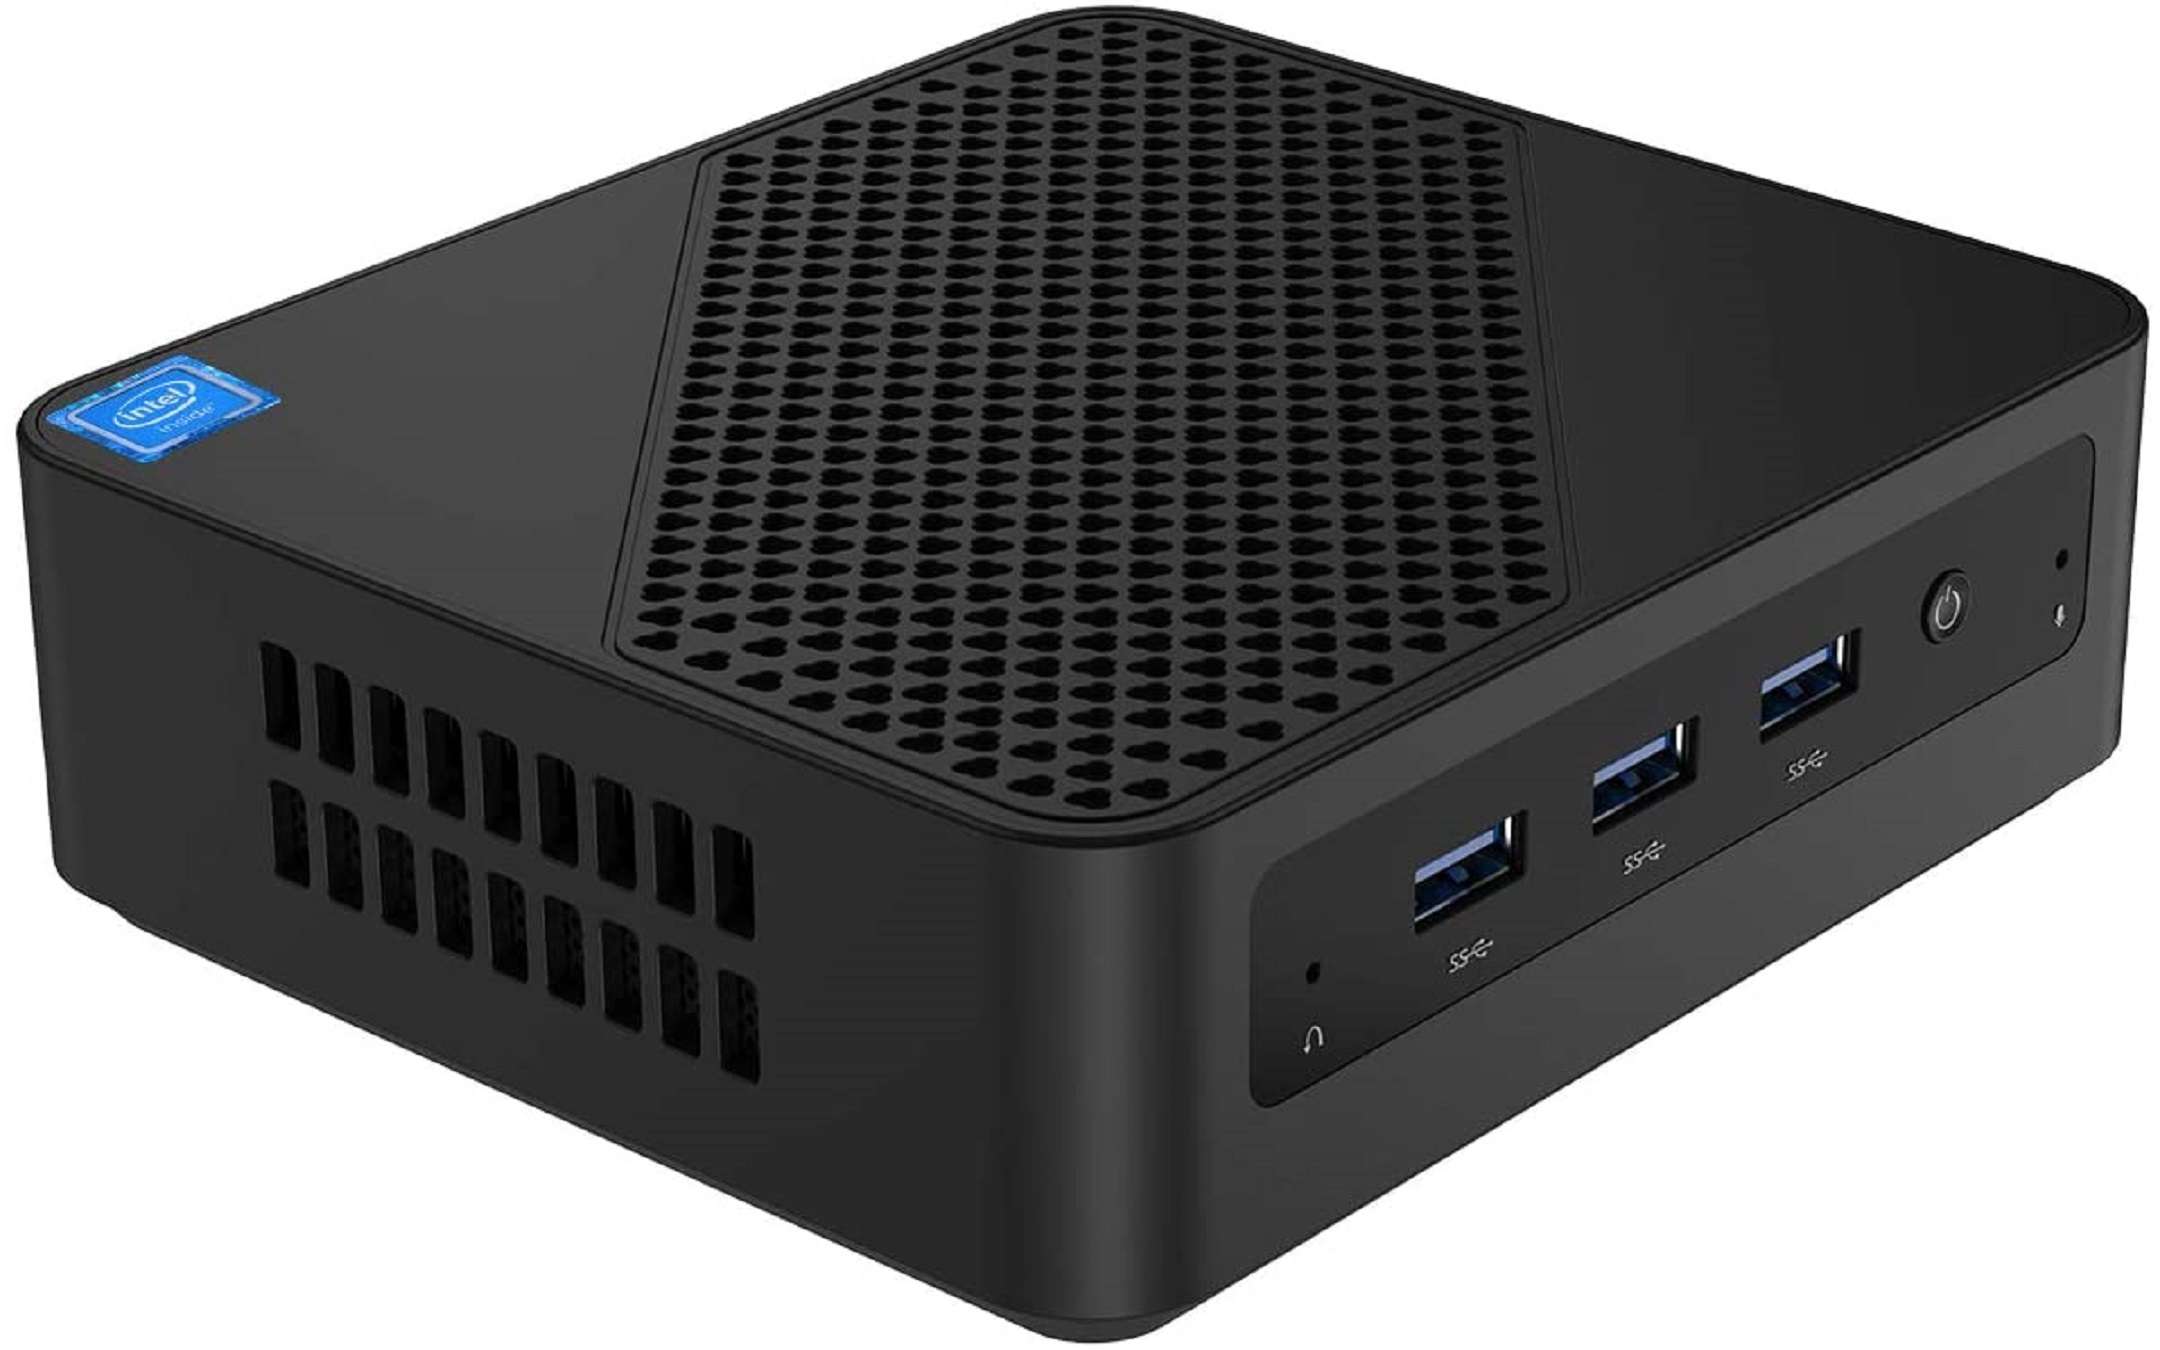 Mini PC with Intel Core i5 at a bargain price on Amazon